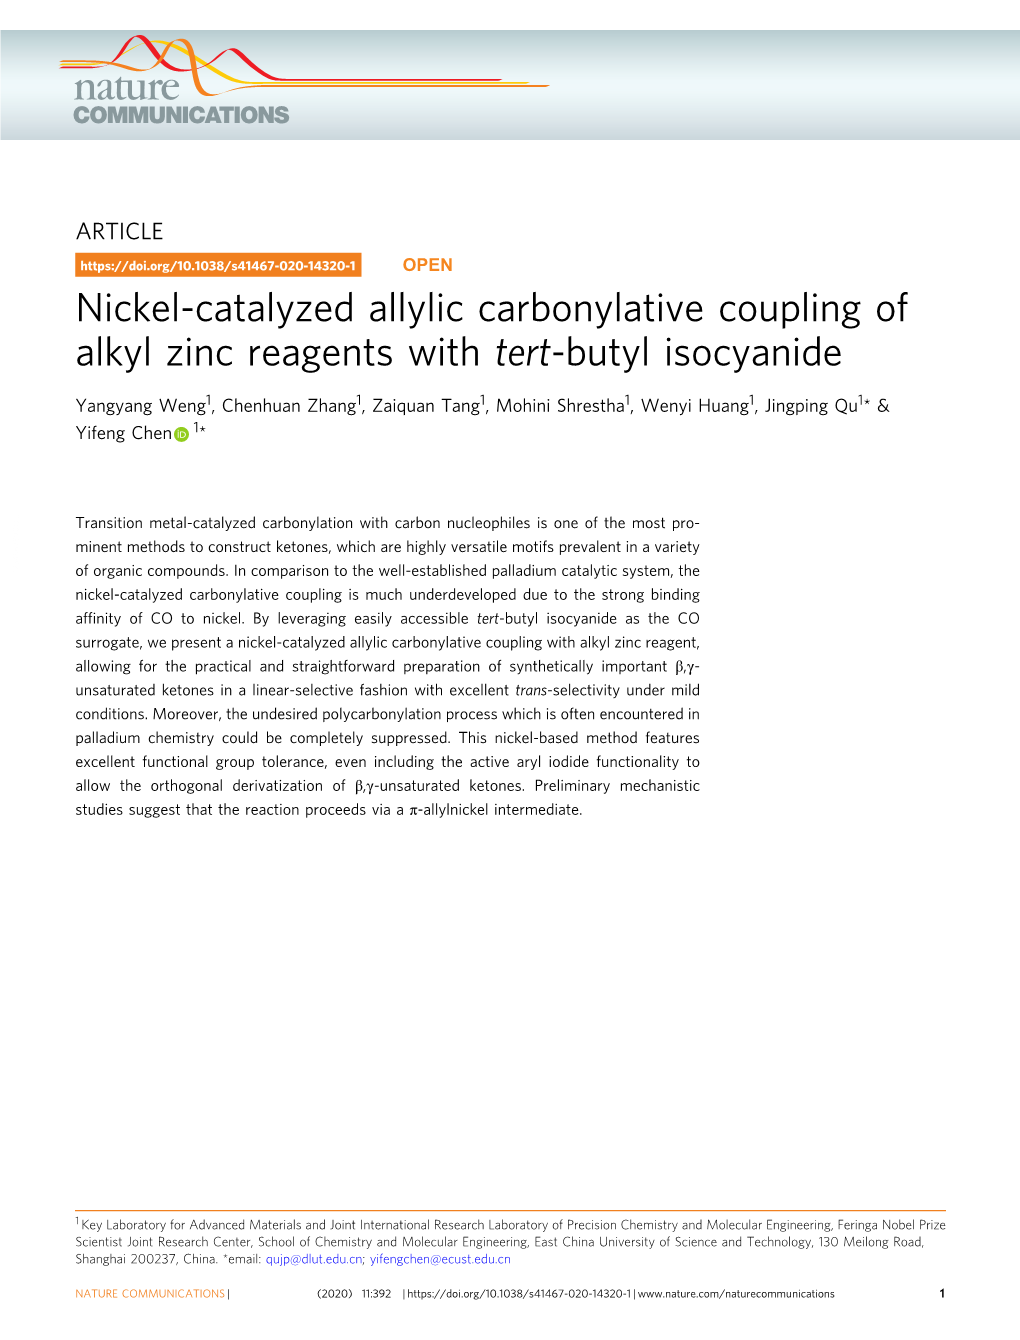 Nickel-Catalyzed Allylic Carbonylative Coupling of Alkyl Zinc Reagents with Tert-Butyl Isocyanide